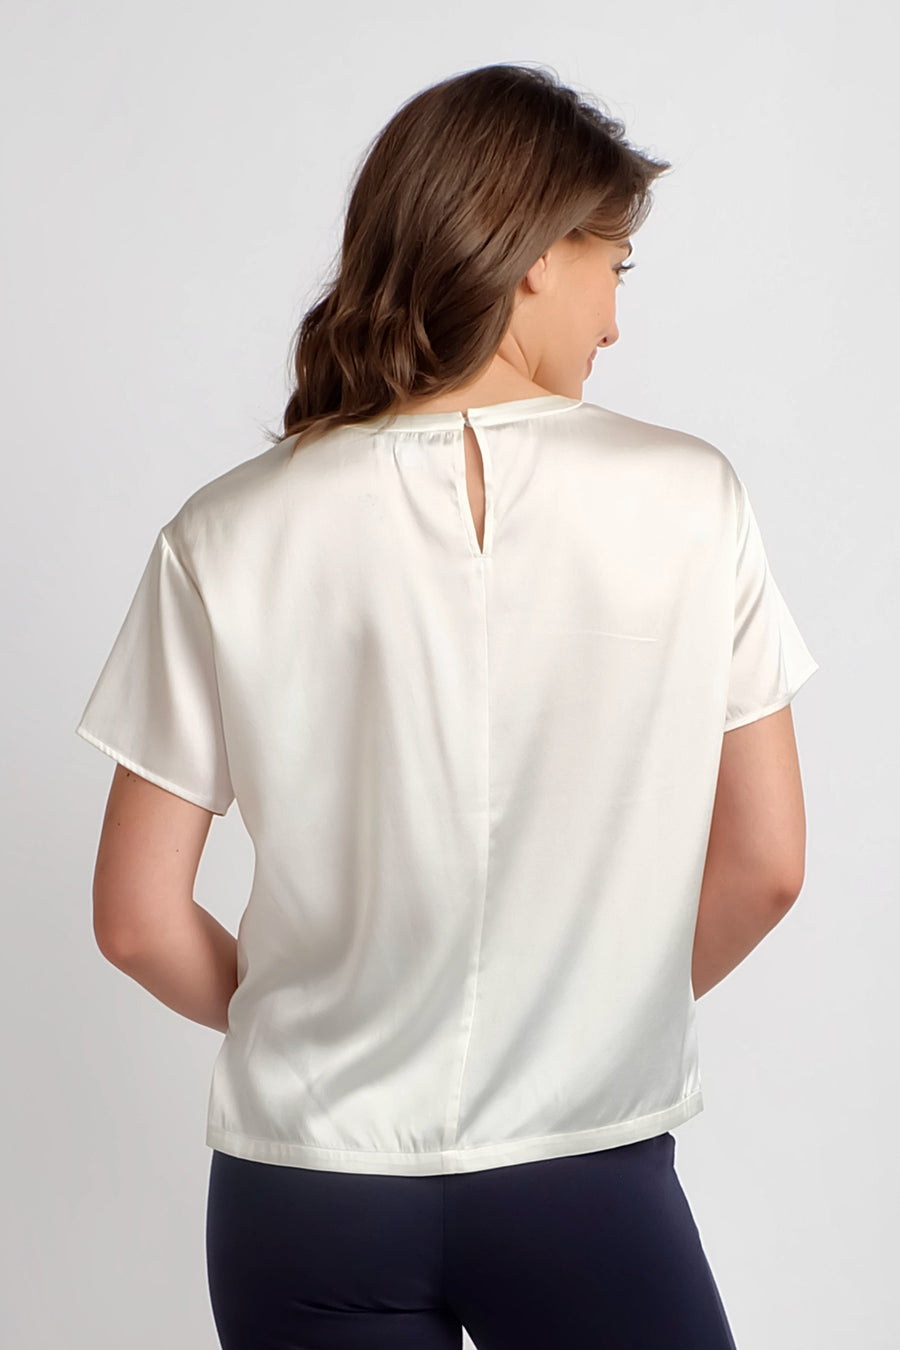 women's short sleeve silk ivory top